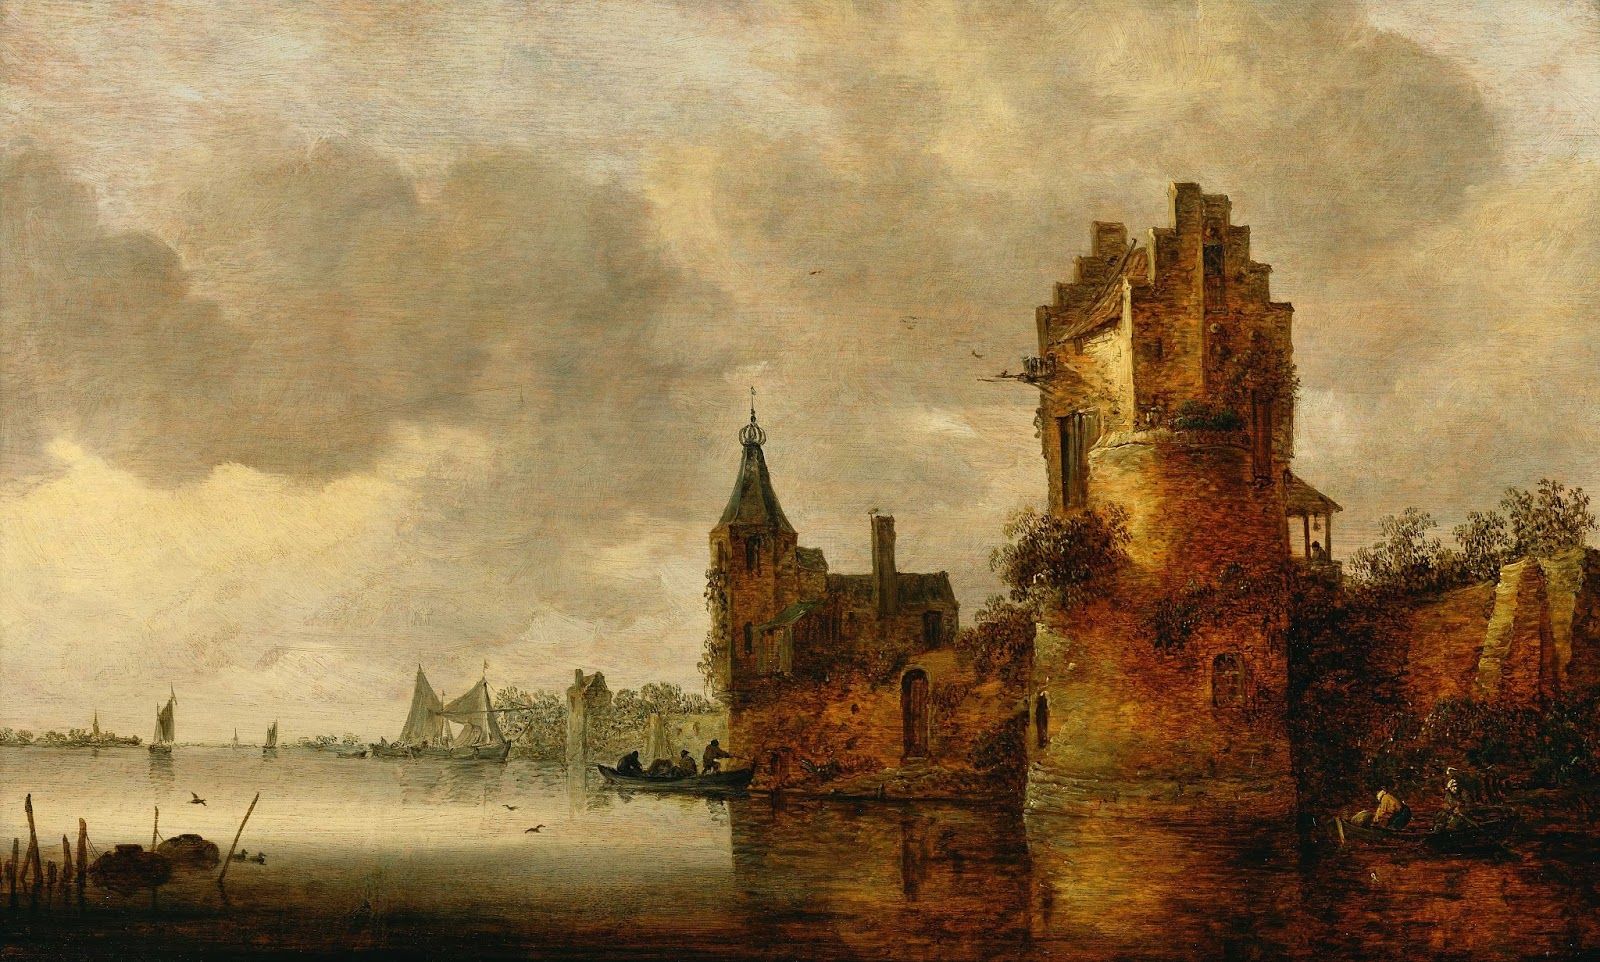 Estuary with Round Tower by Jan van Goyen